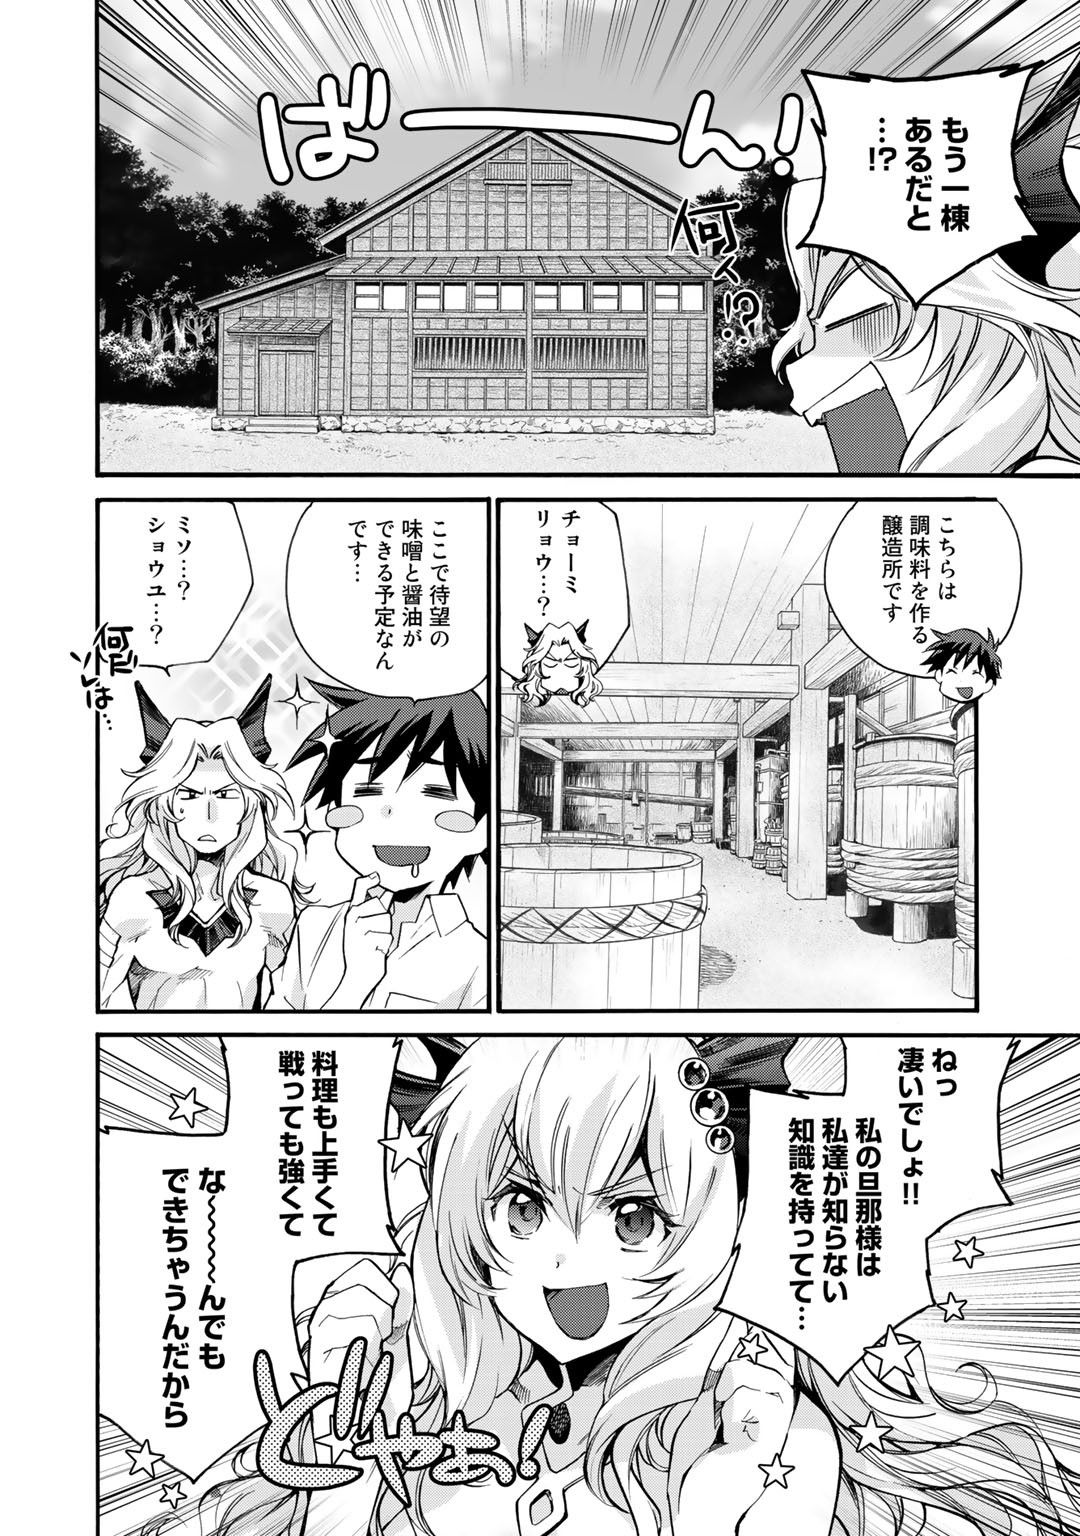 Isekai de Tochi o Katte Noujou o Tsukurou - Chapter 8 - Page 4